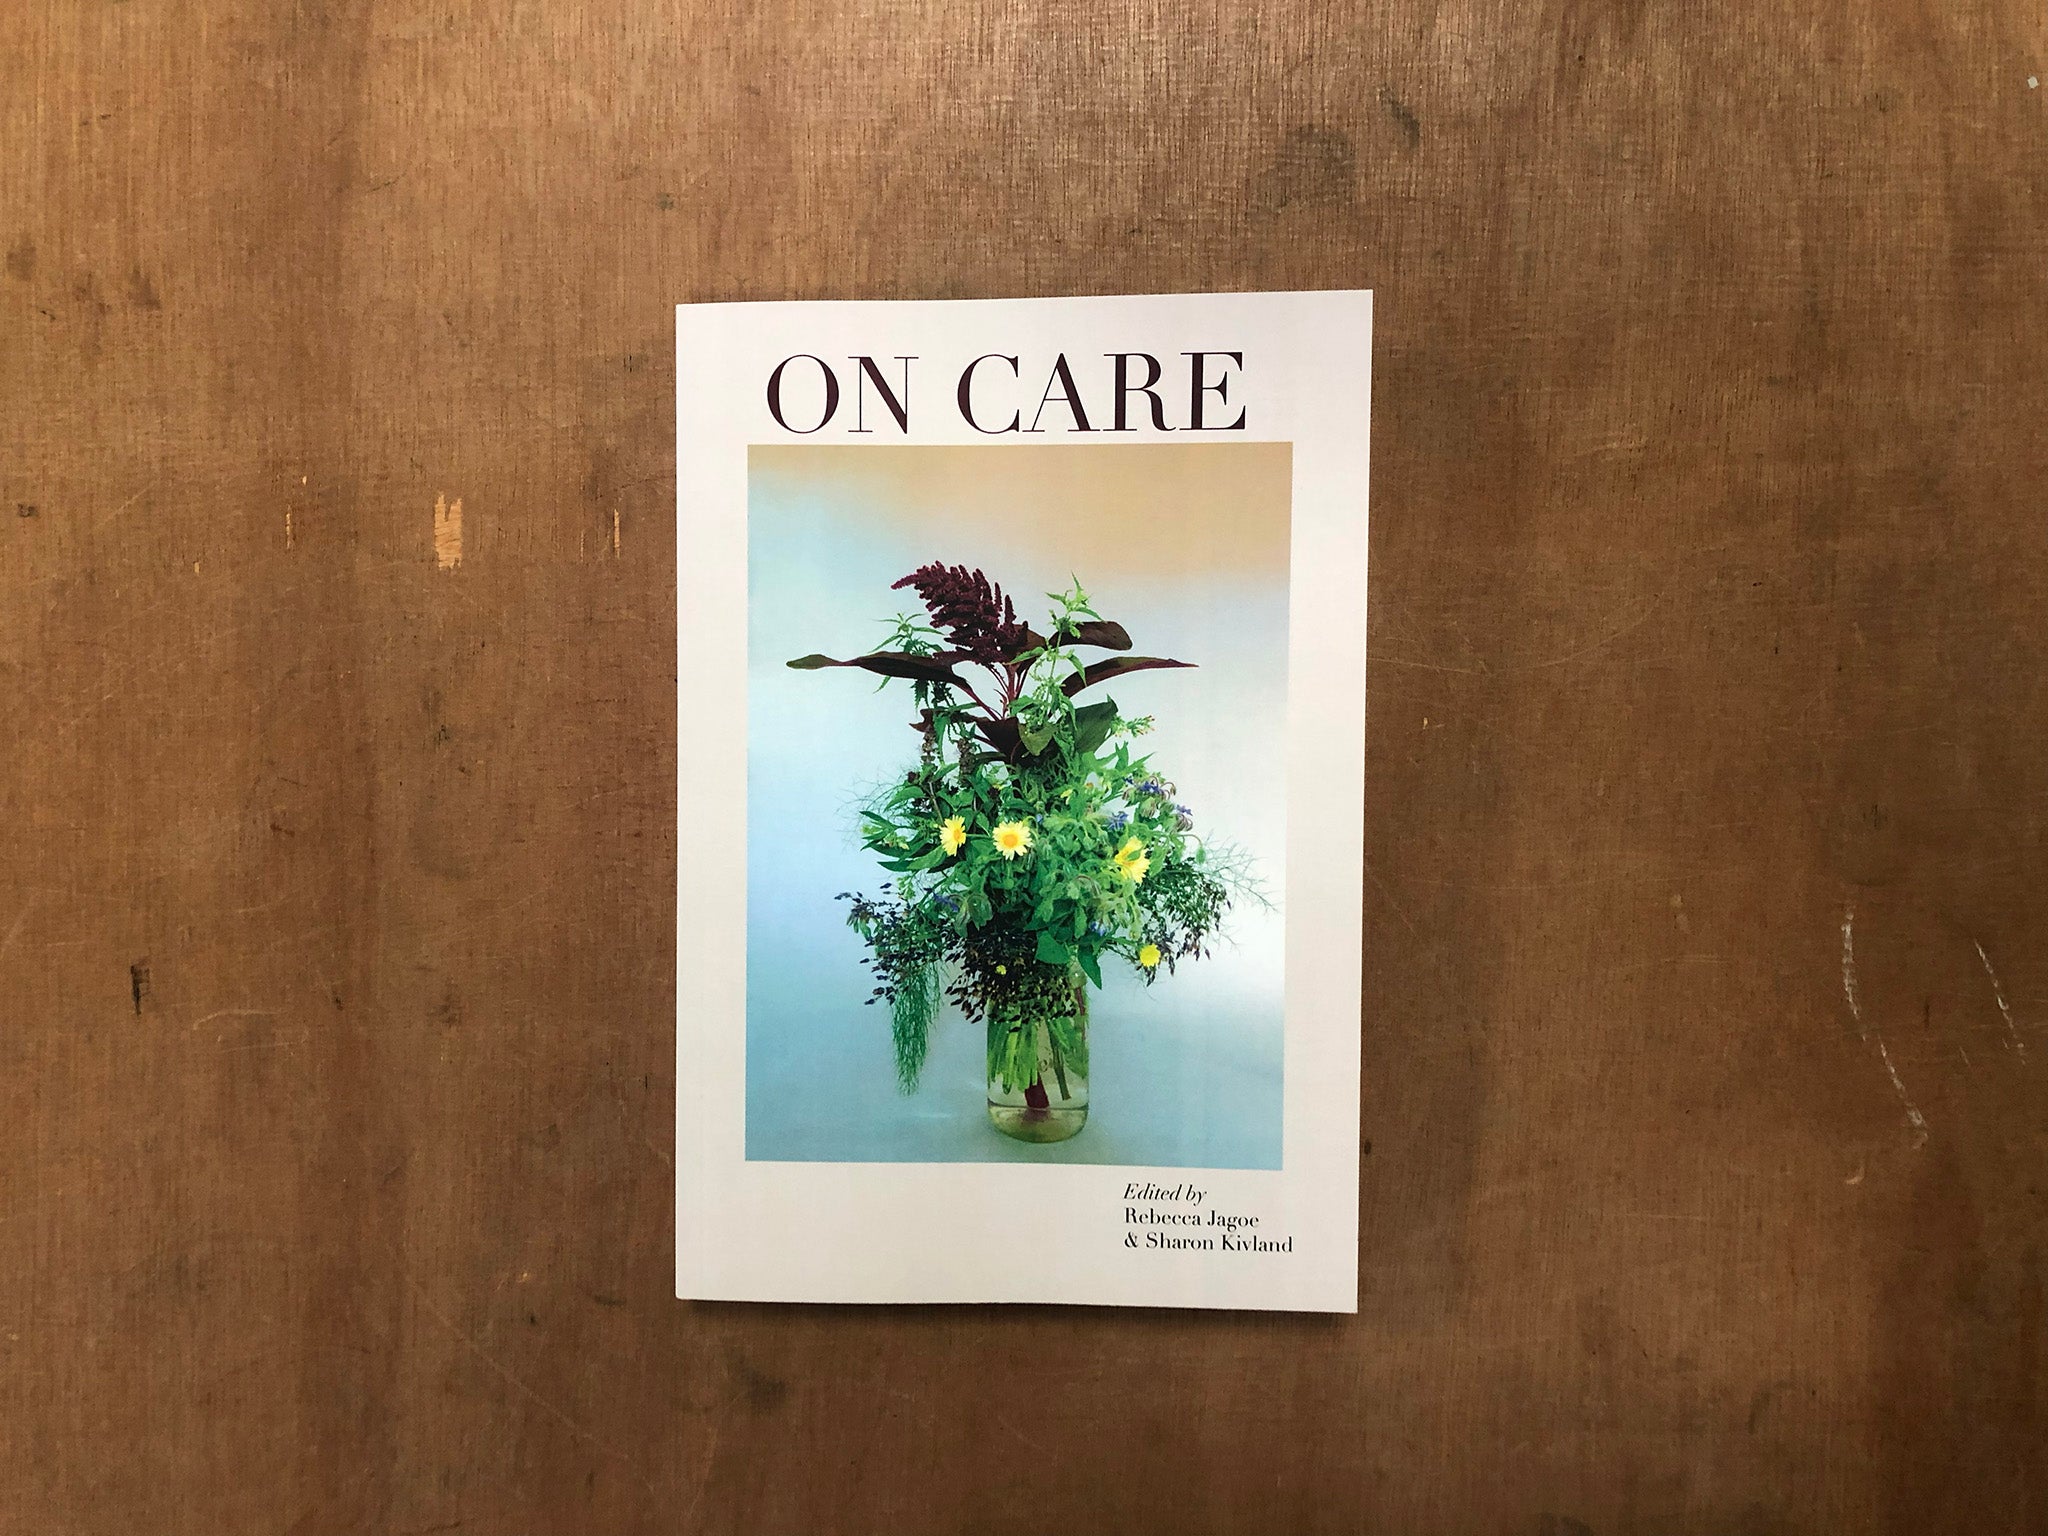 ON CARE by Rebecca Jagoe & Sharon Kivland (Ed.)